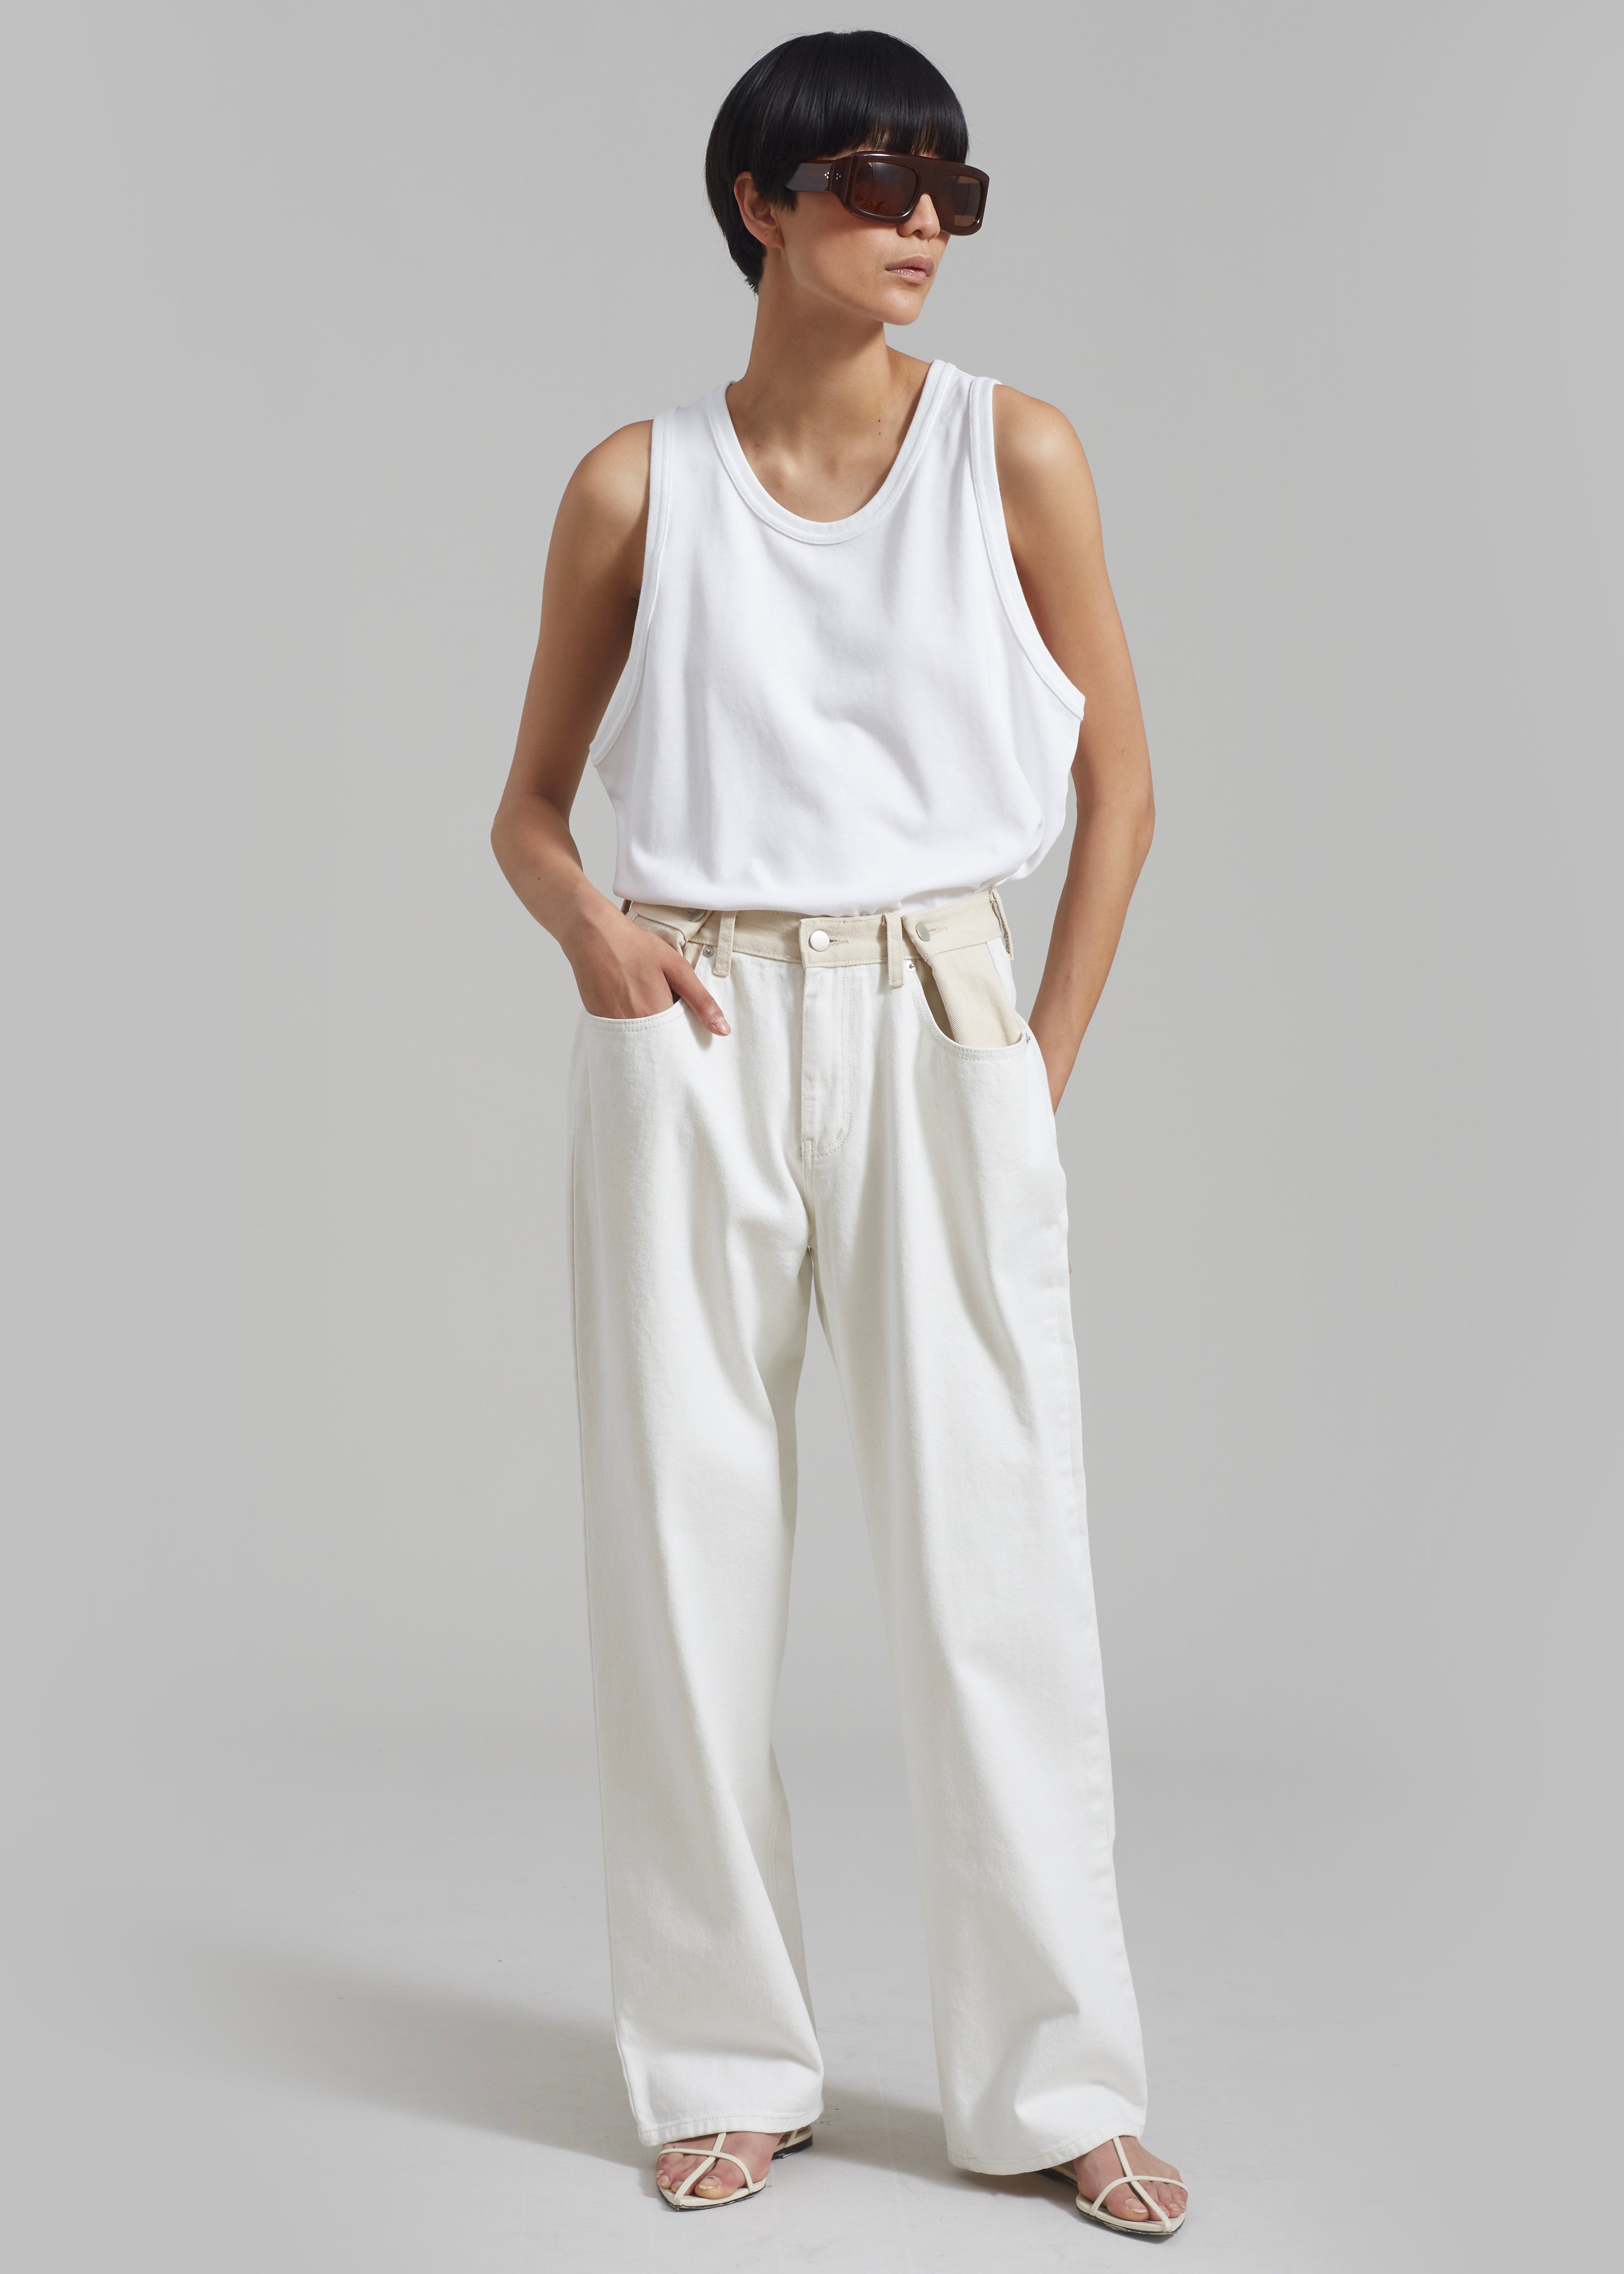 Hayla Contrast Denim Pants - Off White/Beige - 7